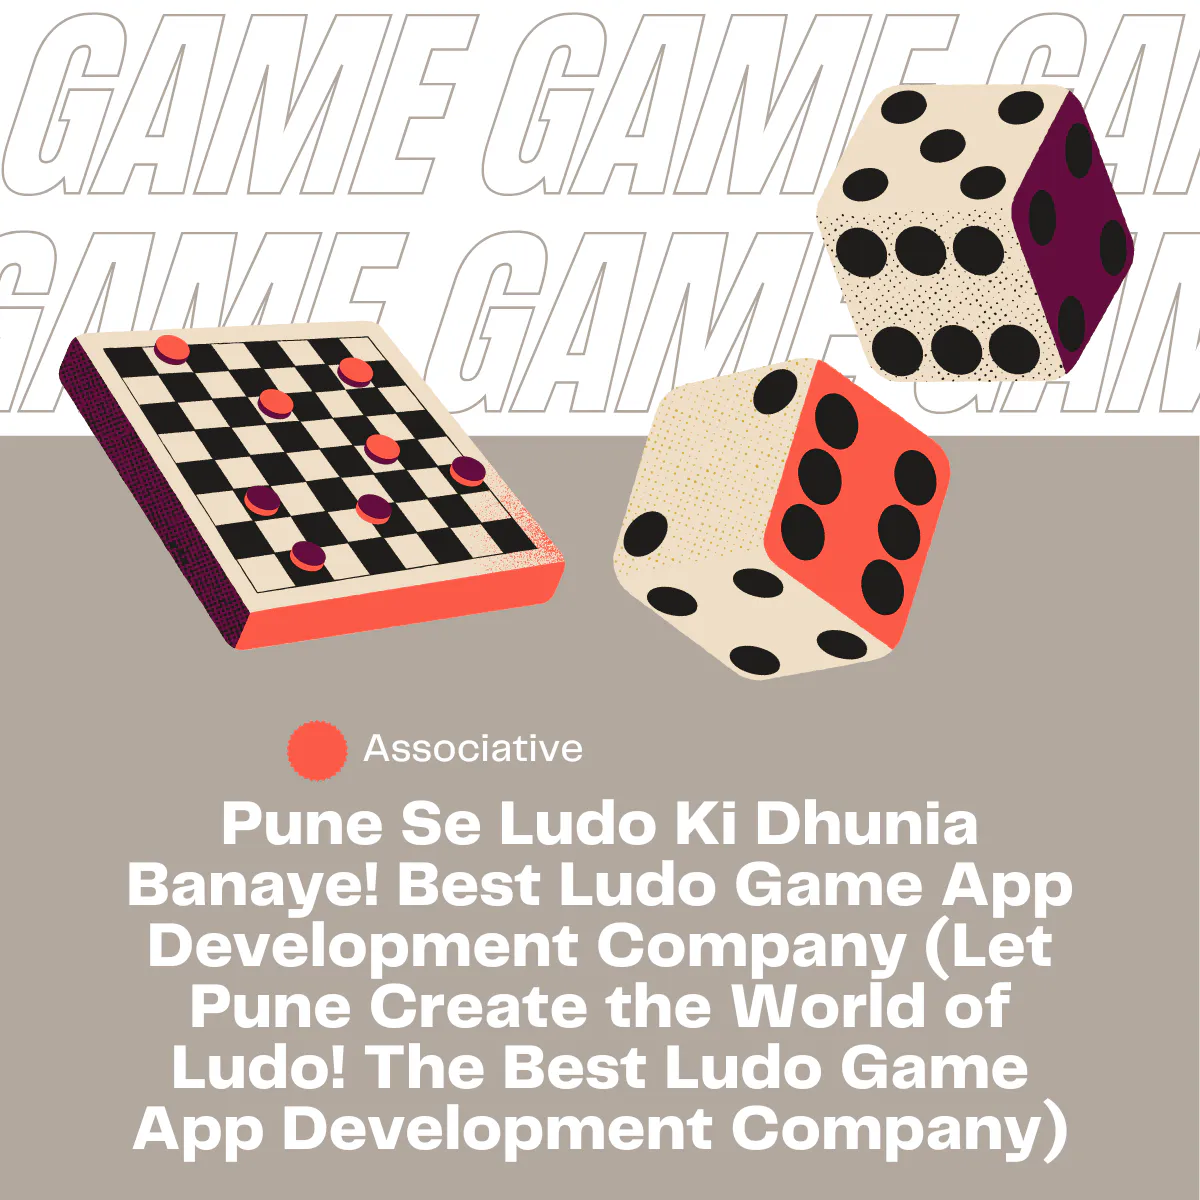 The Best Ludo Game App Development Company